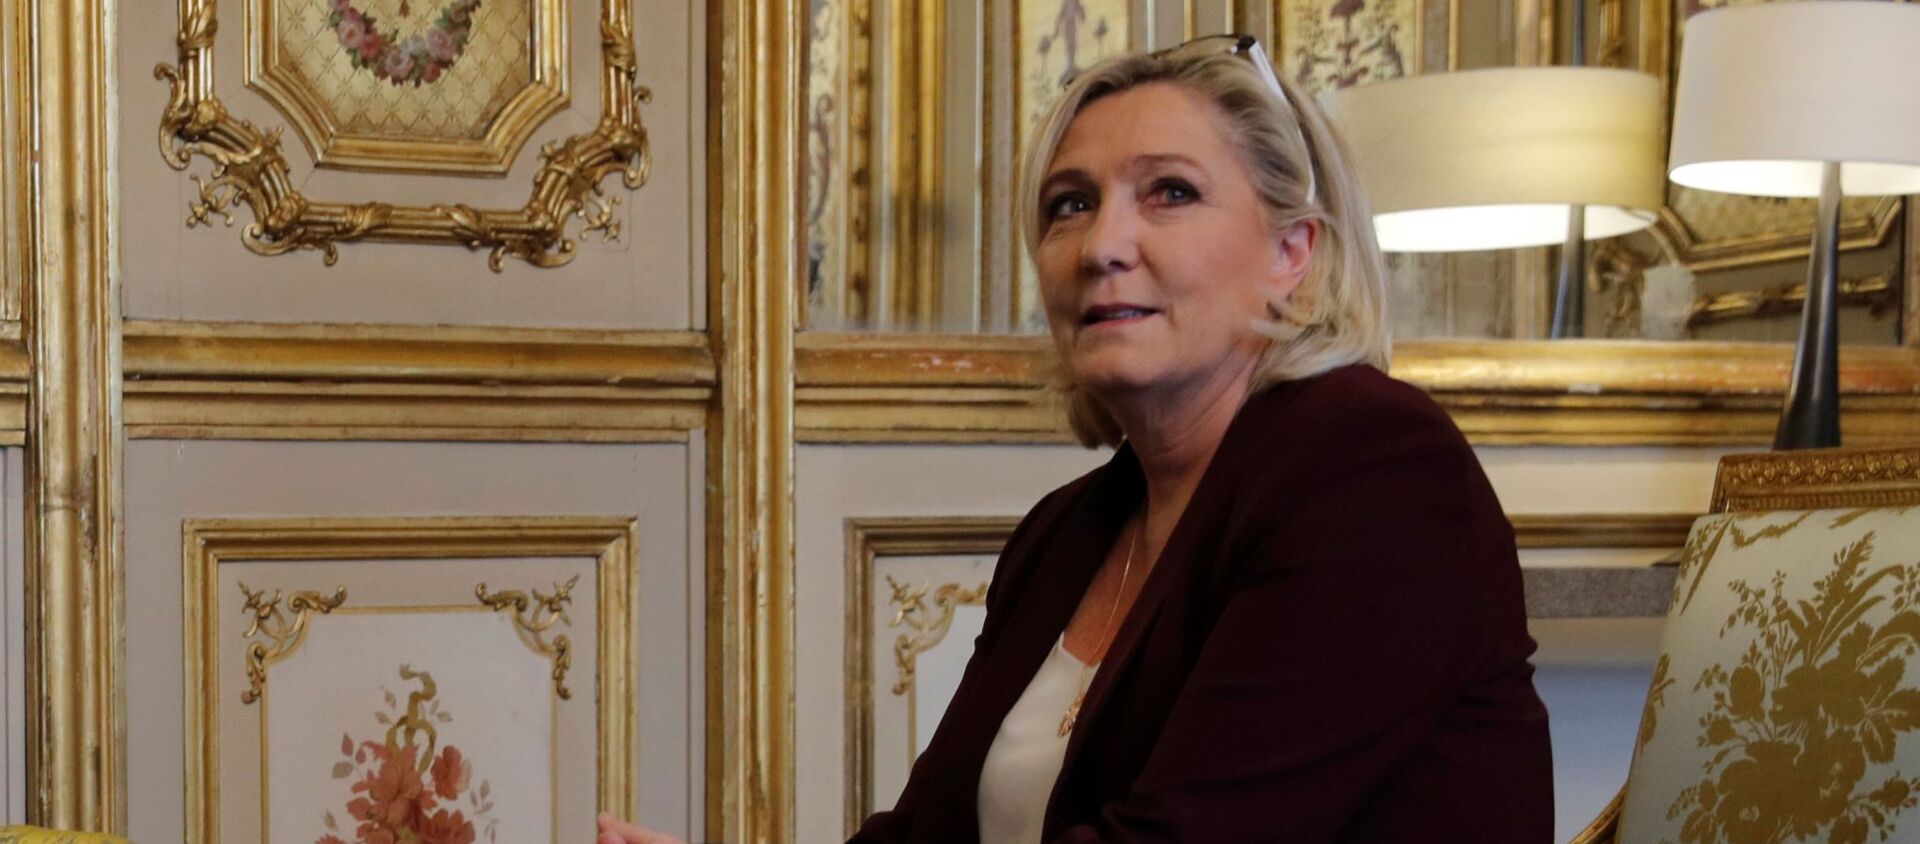 Marine Le Pen at the Elysee Palace in Paris, France, February 6, 2019 - Sputnik International, 1920, 04.07.2021